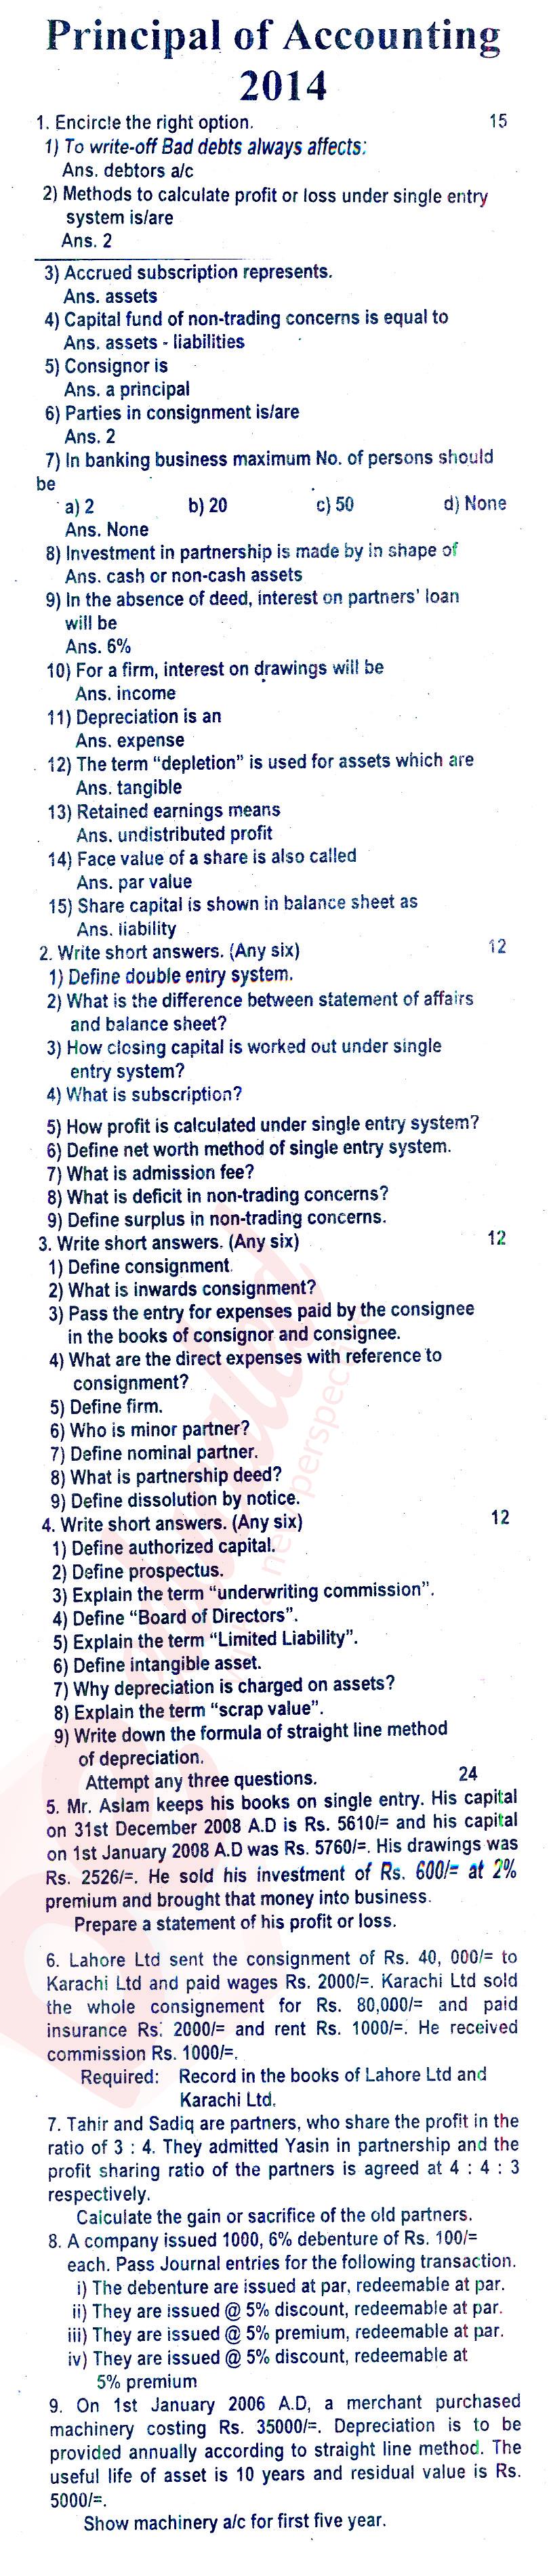 Principles of Accounting ICOM Part 2 Past Paper Group 1 BISE Rawalpindi 2014